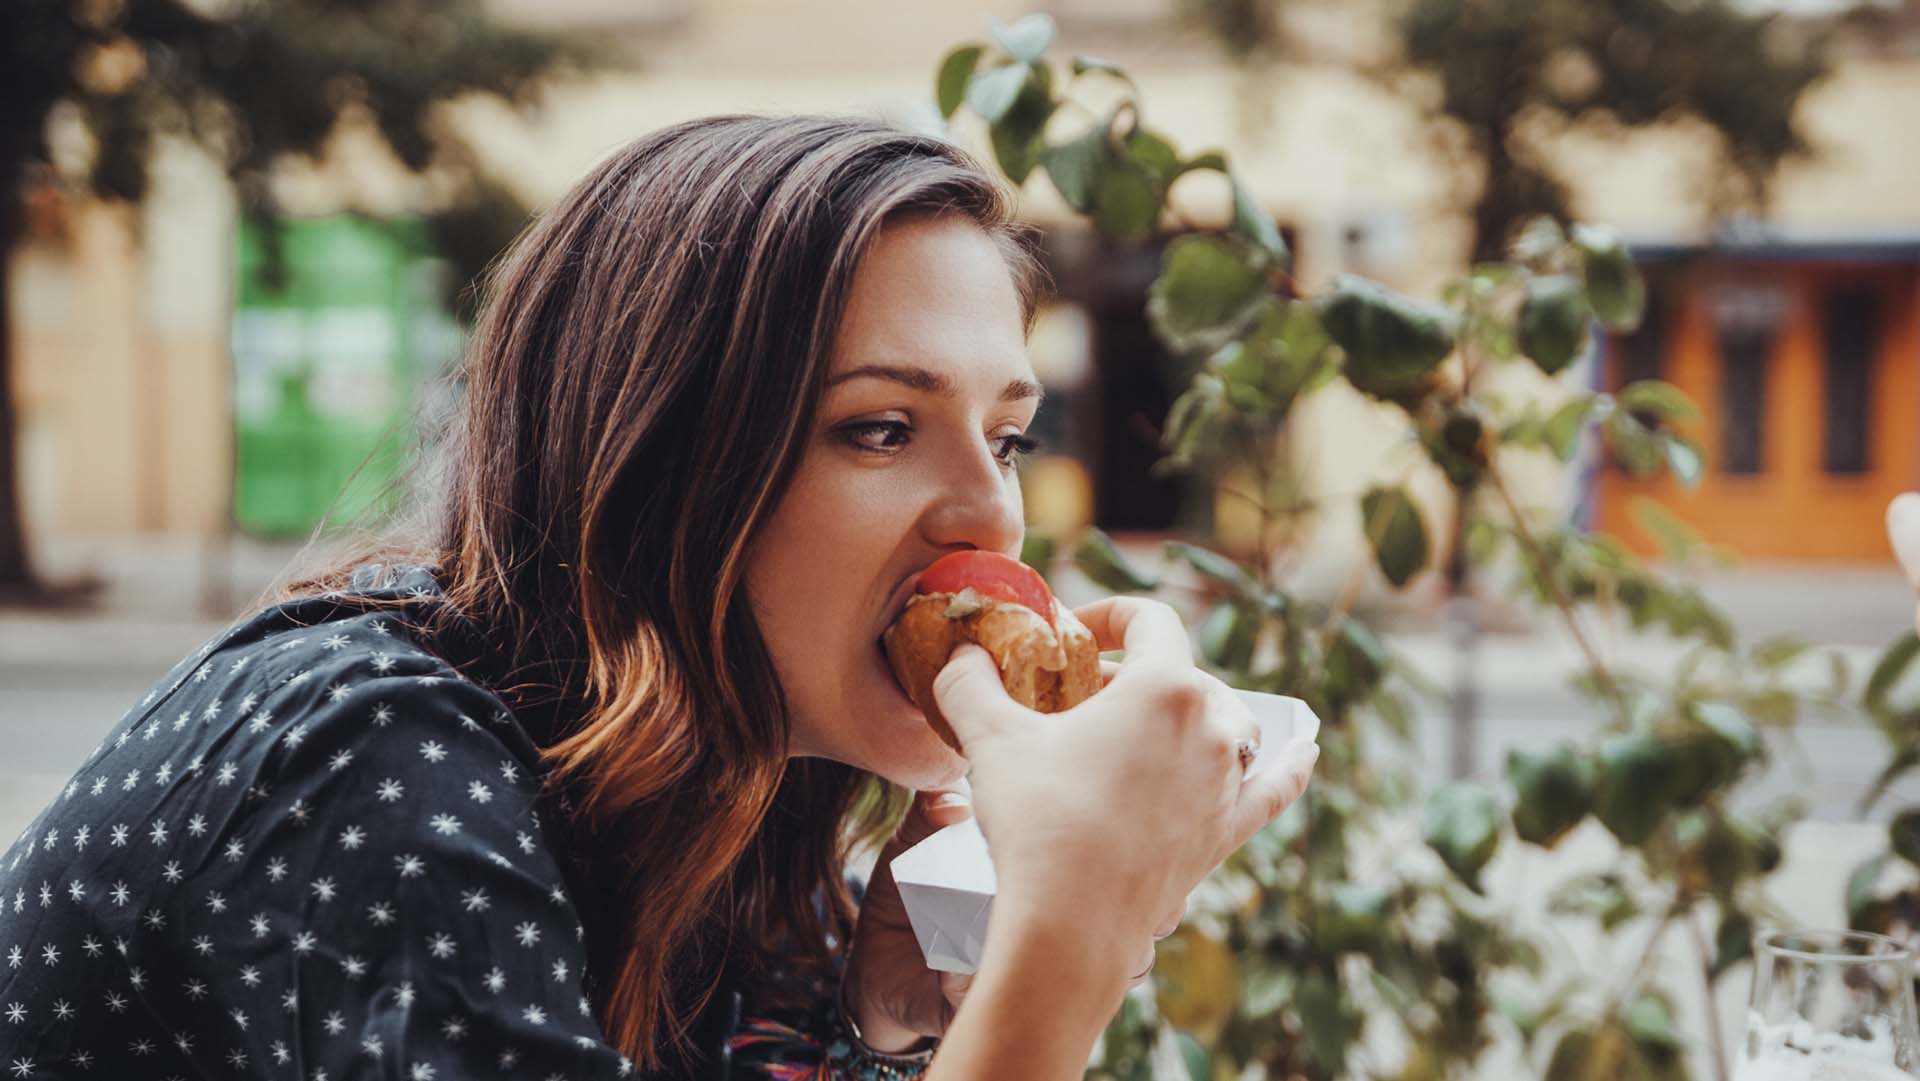 Young Woman Eating A Hotdog